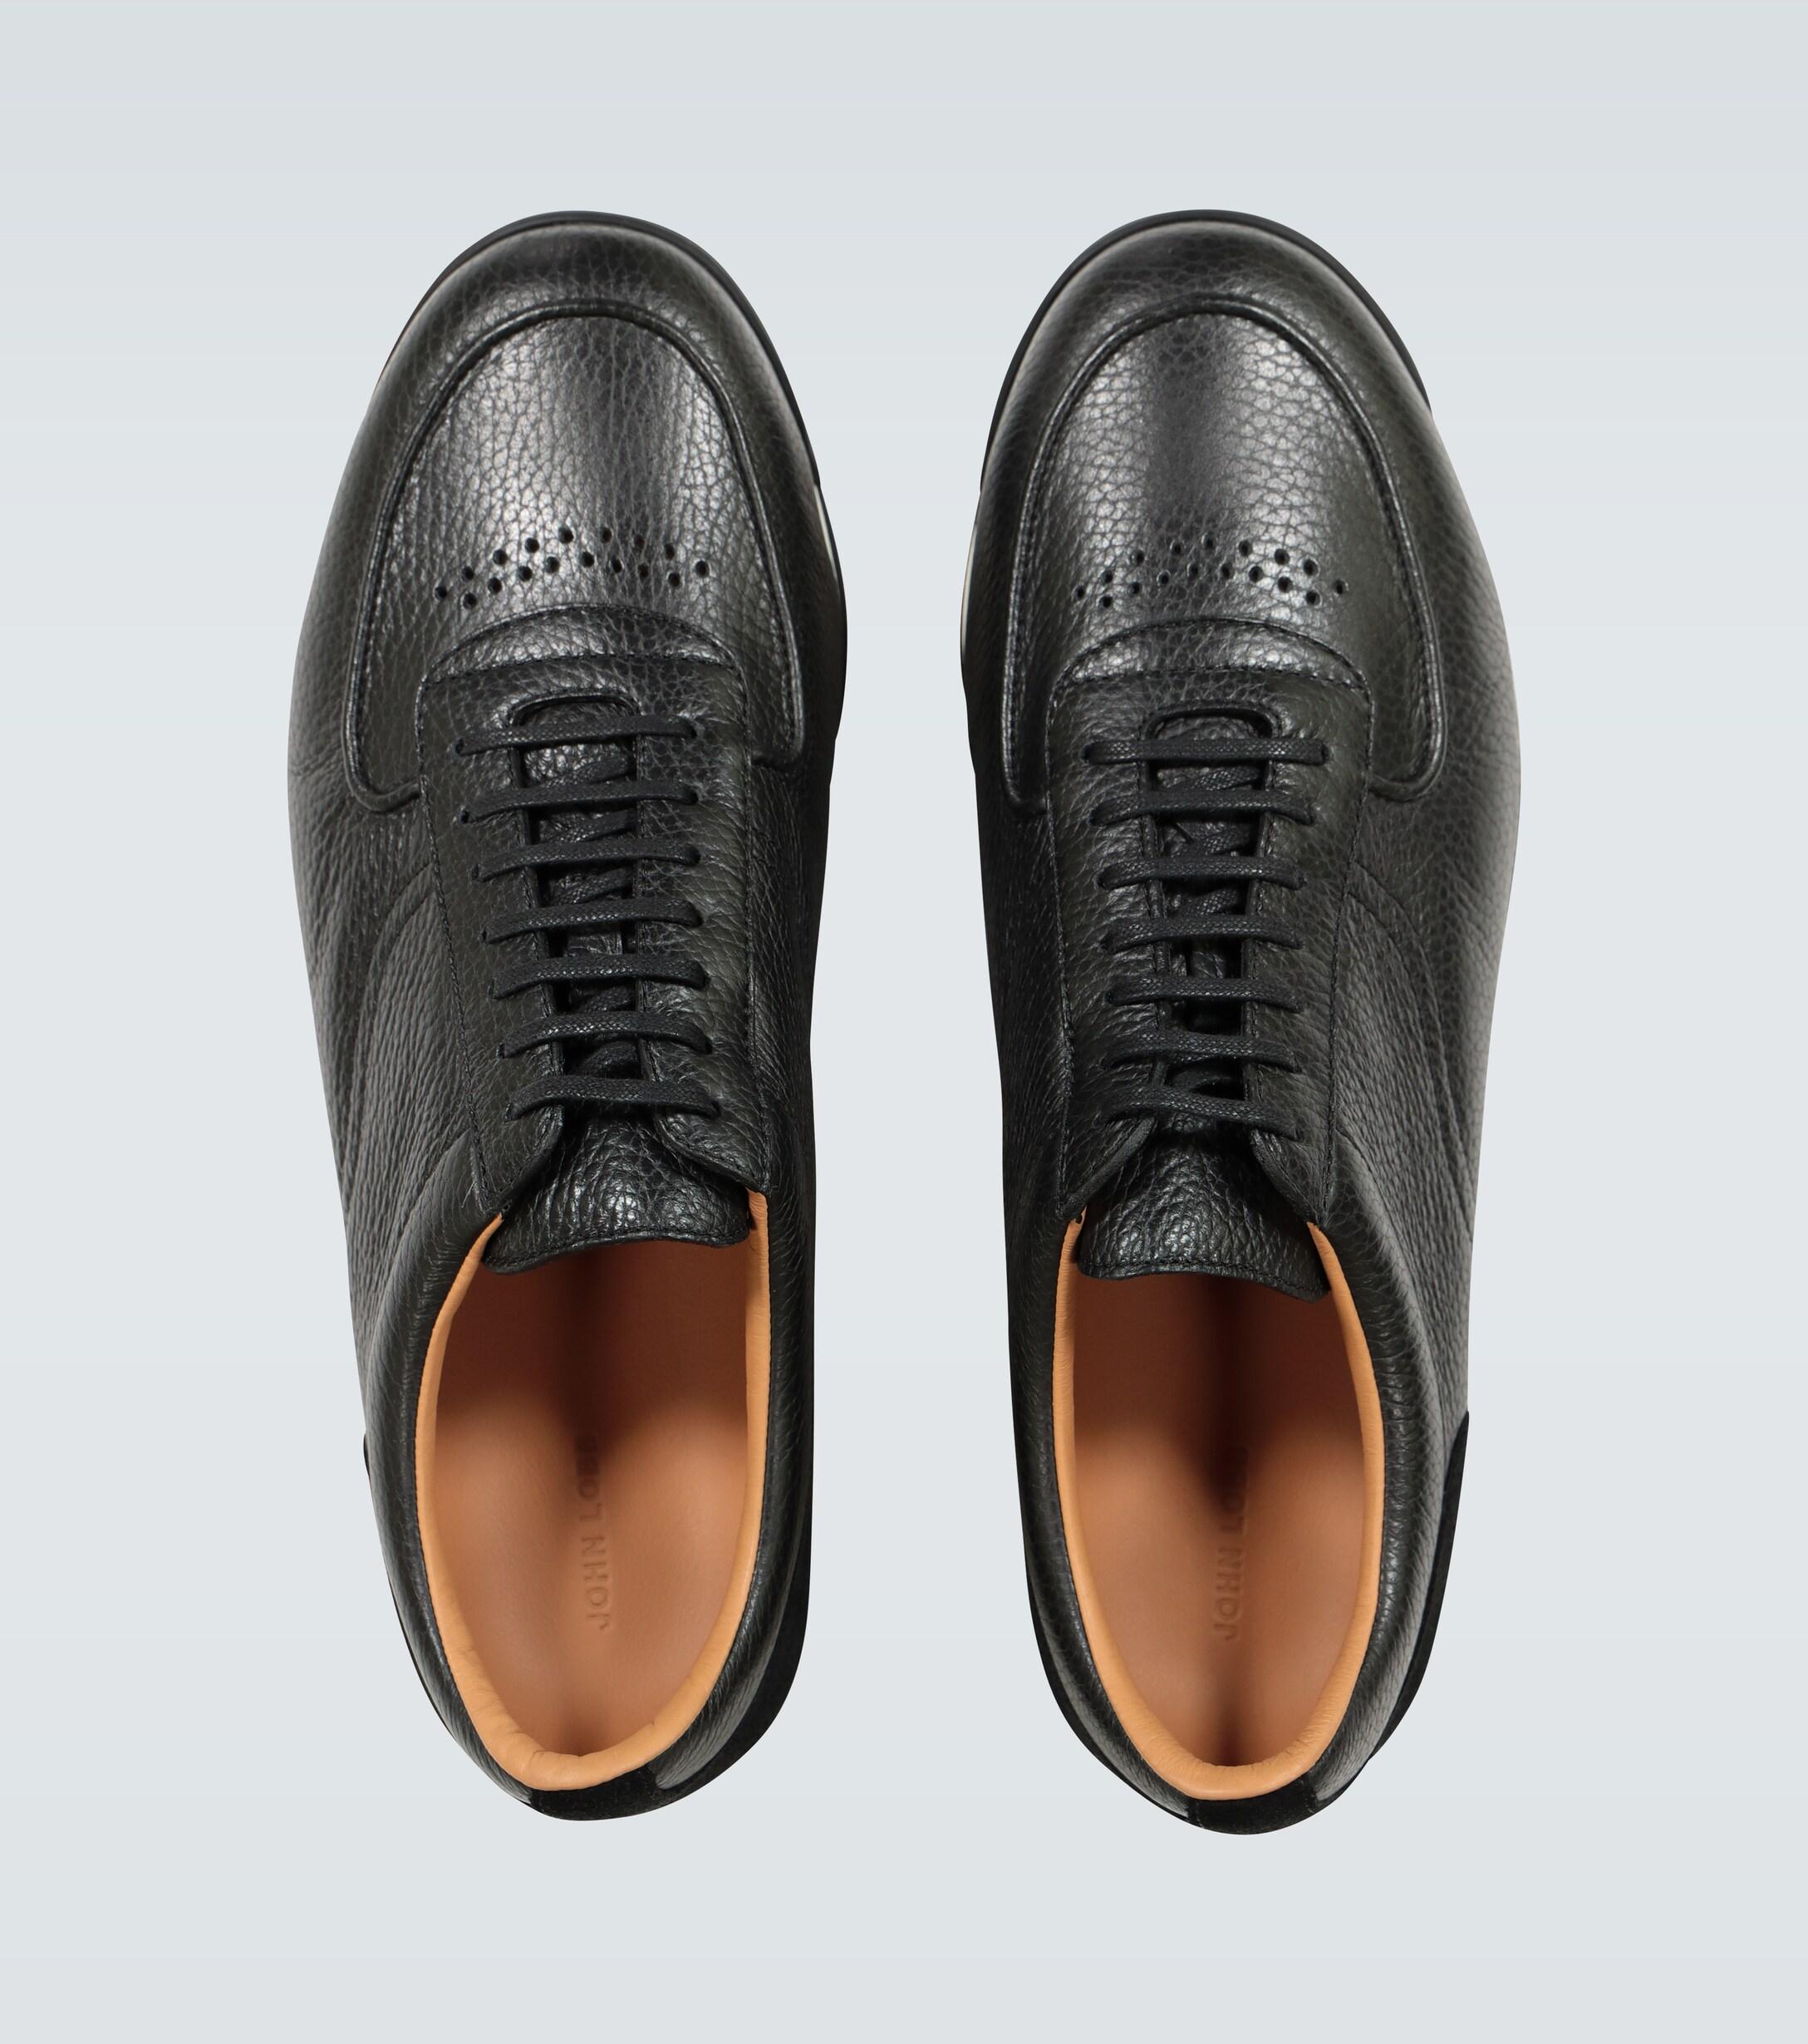 John Lobb Porth Leather Sneakers in Black for Men - Lyst